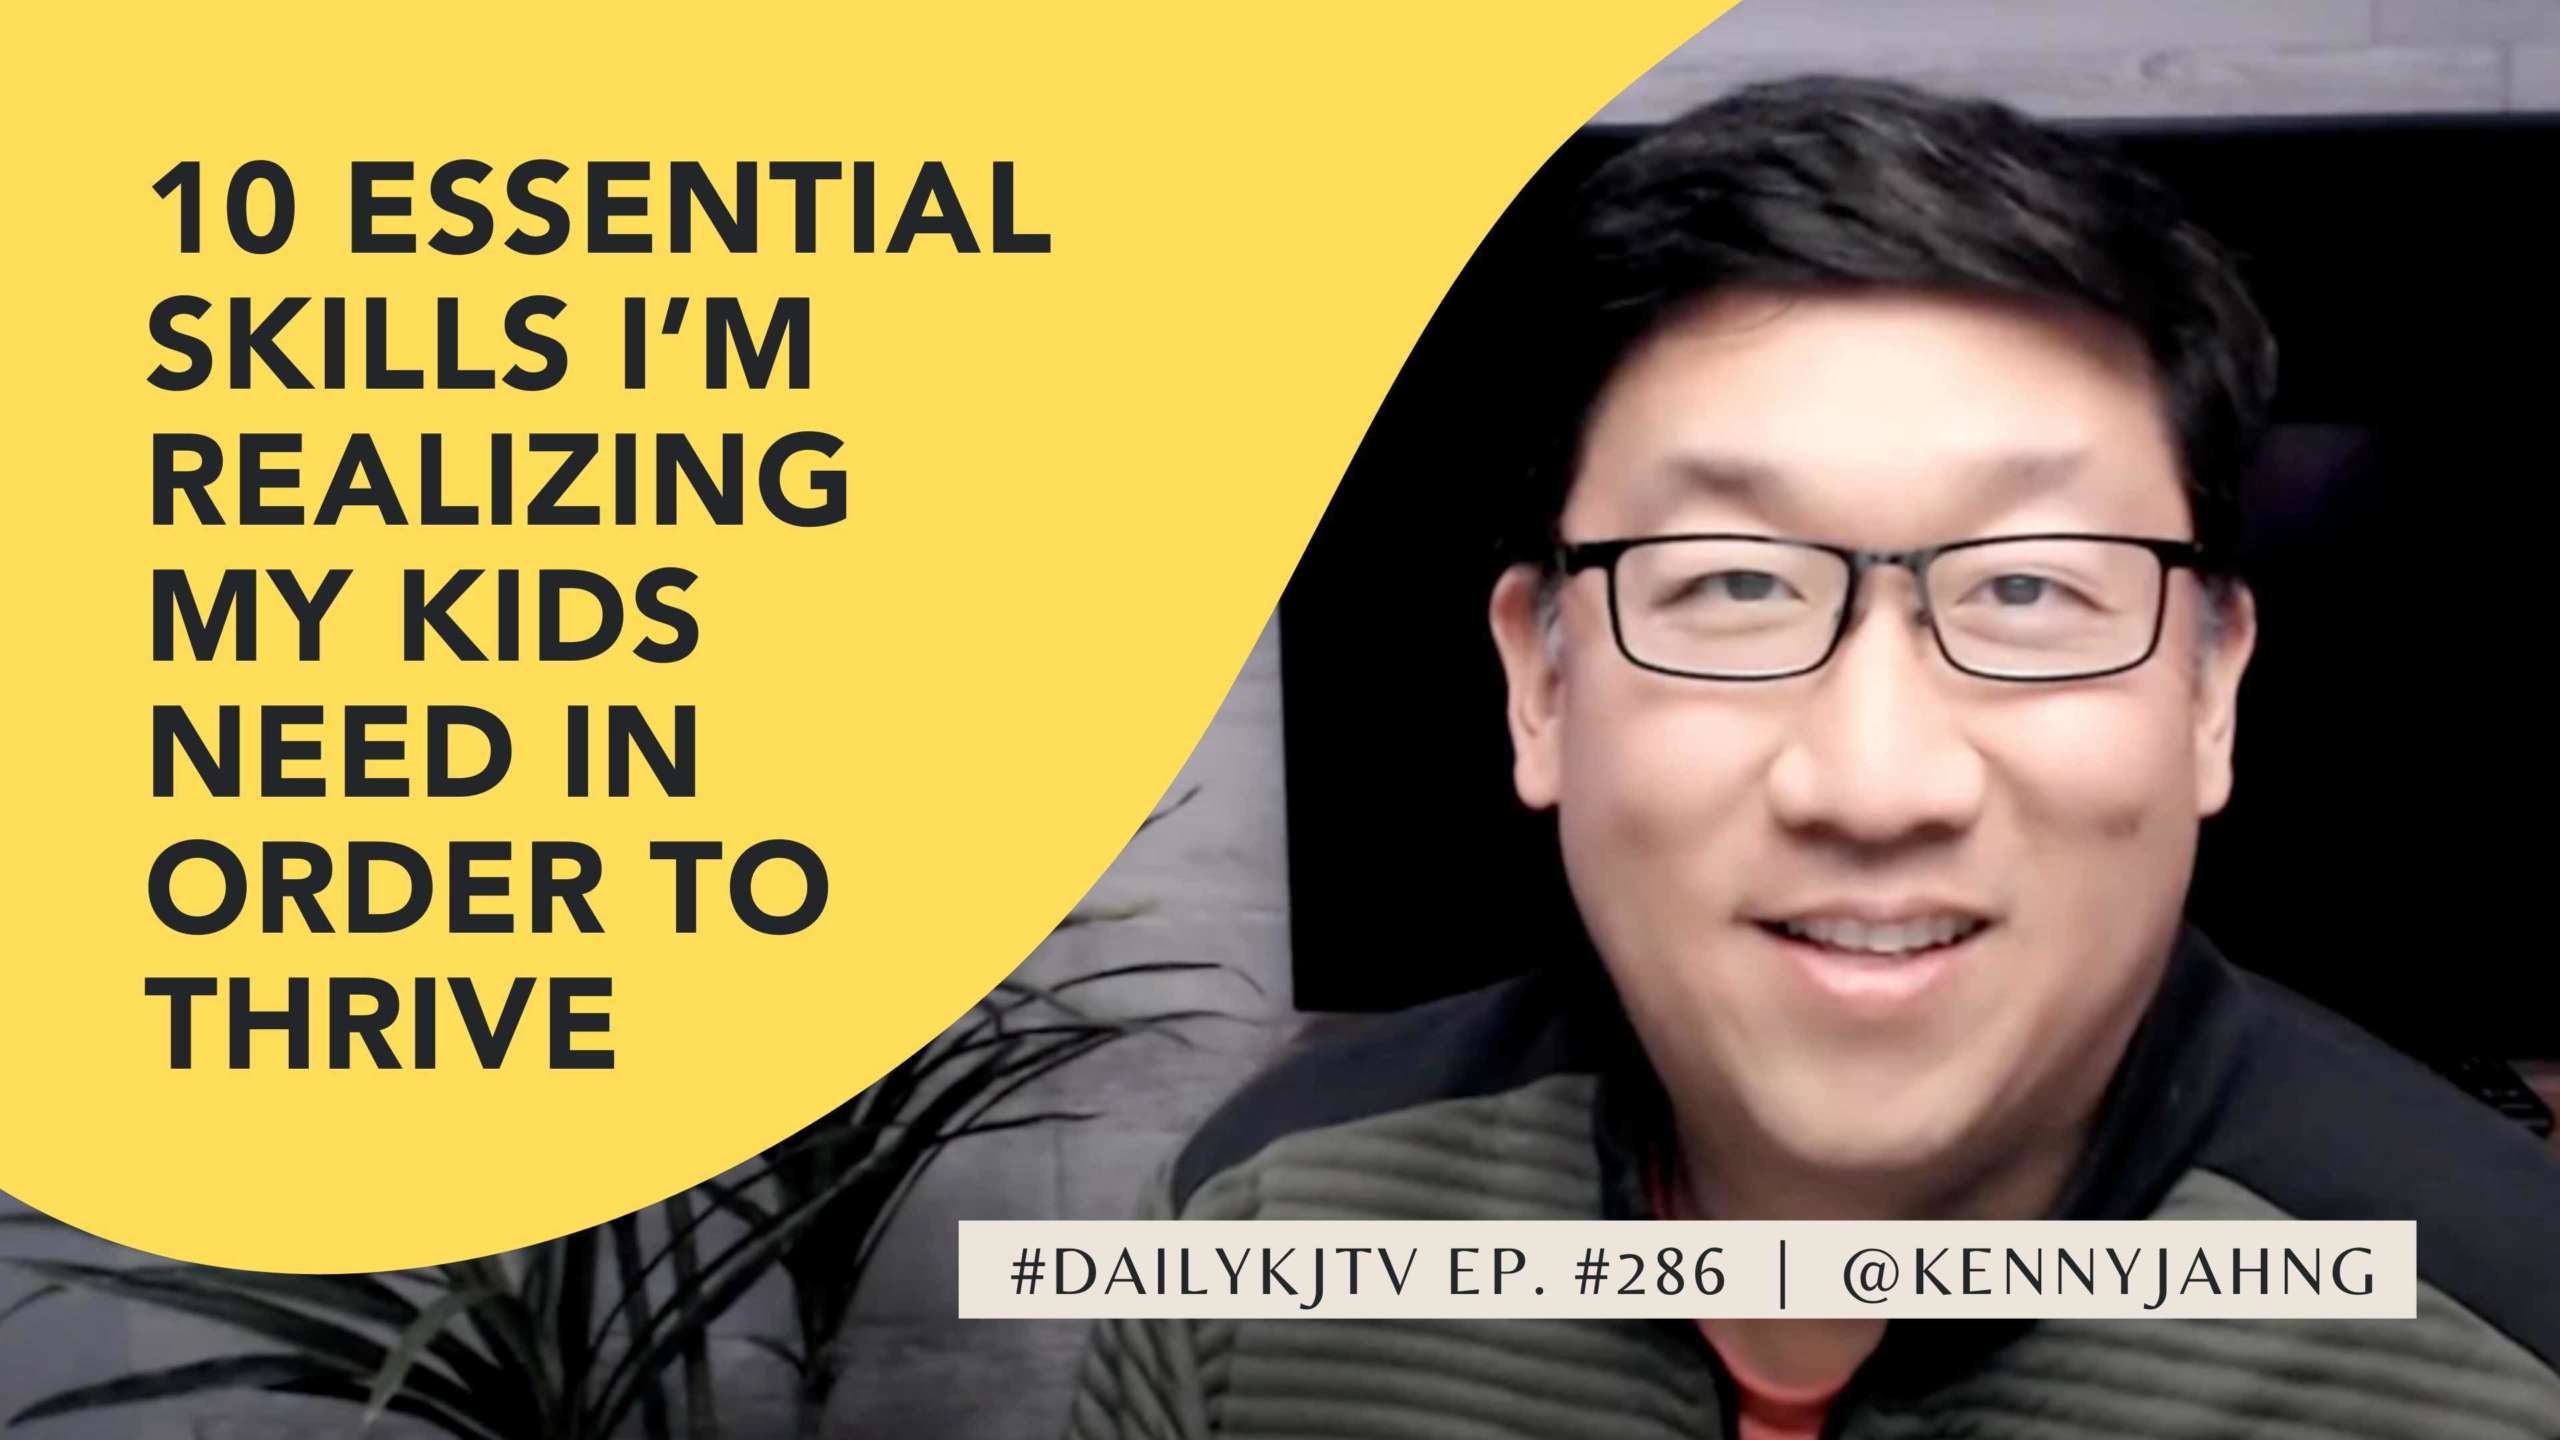 DailyKJTV Vlog Ep 286 - essential work skills to thrive